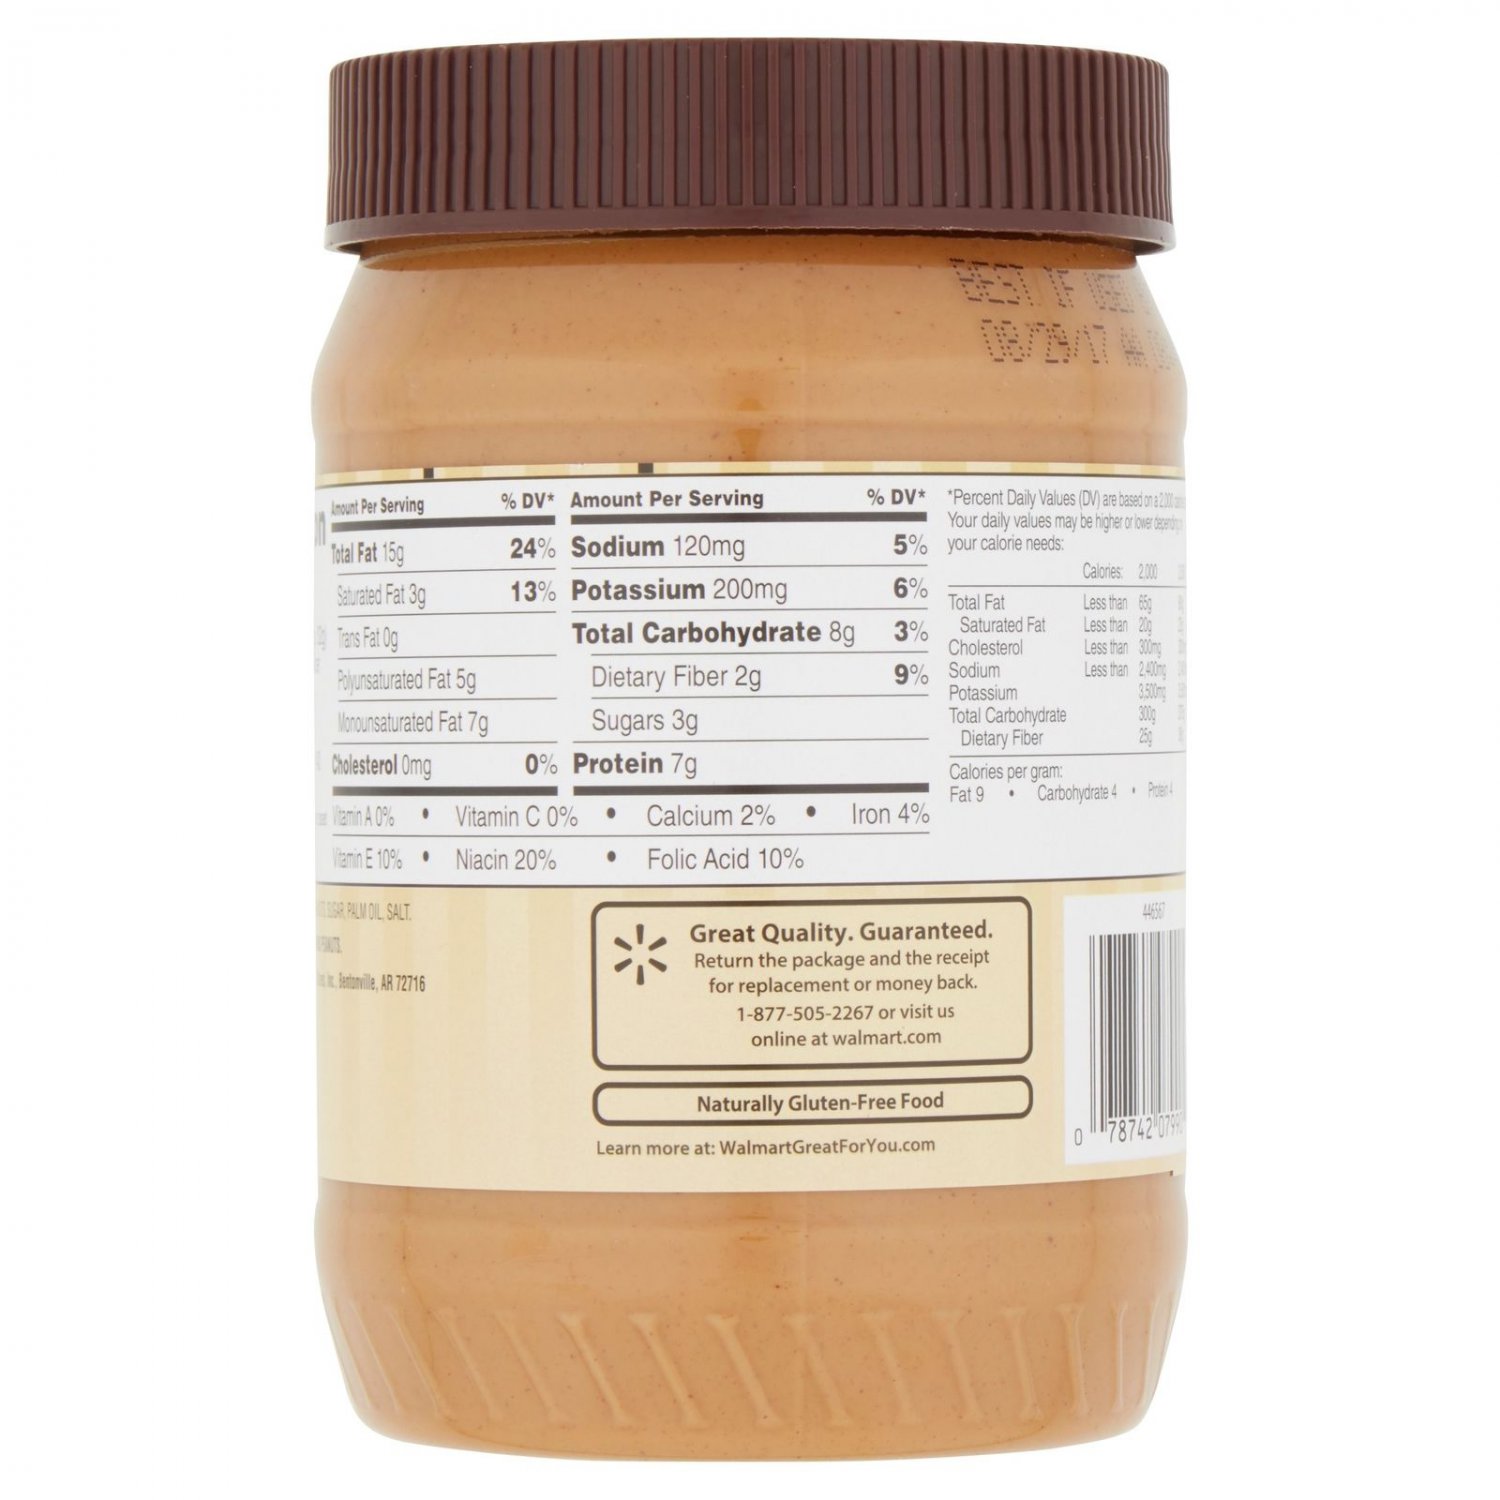 Great Value Natural No Stir Creamy Peanut Butter, 26.5 ounces 23 oz